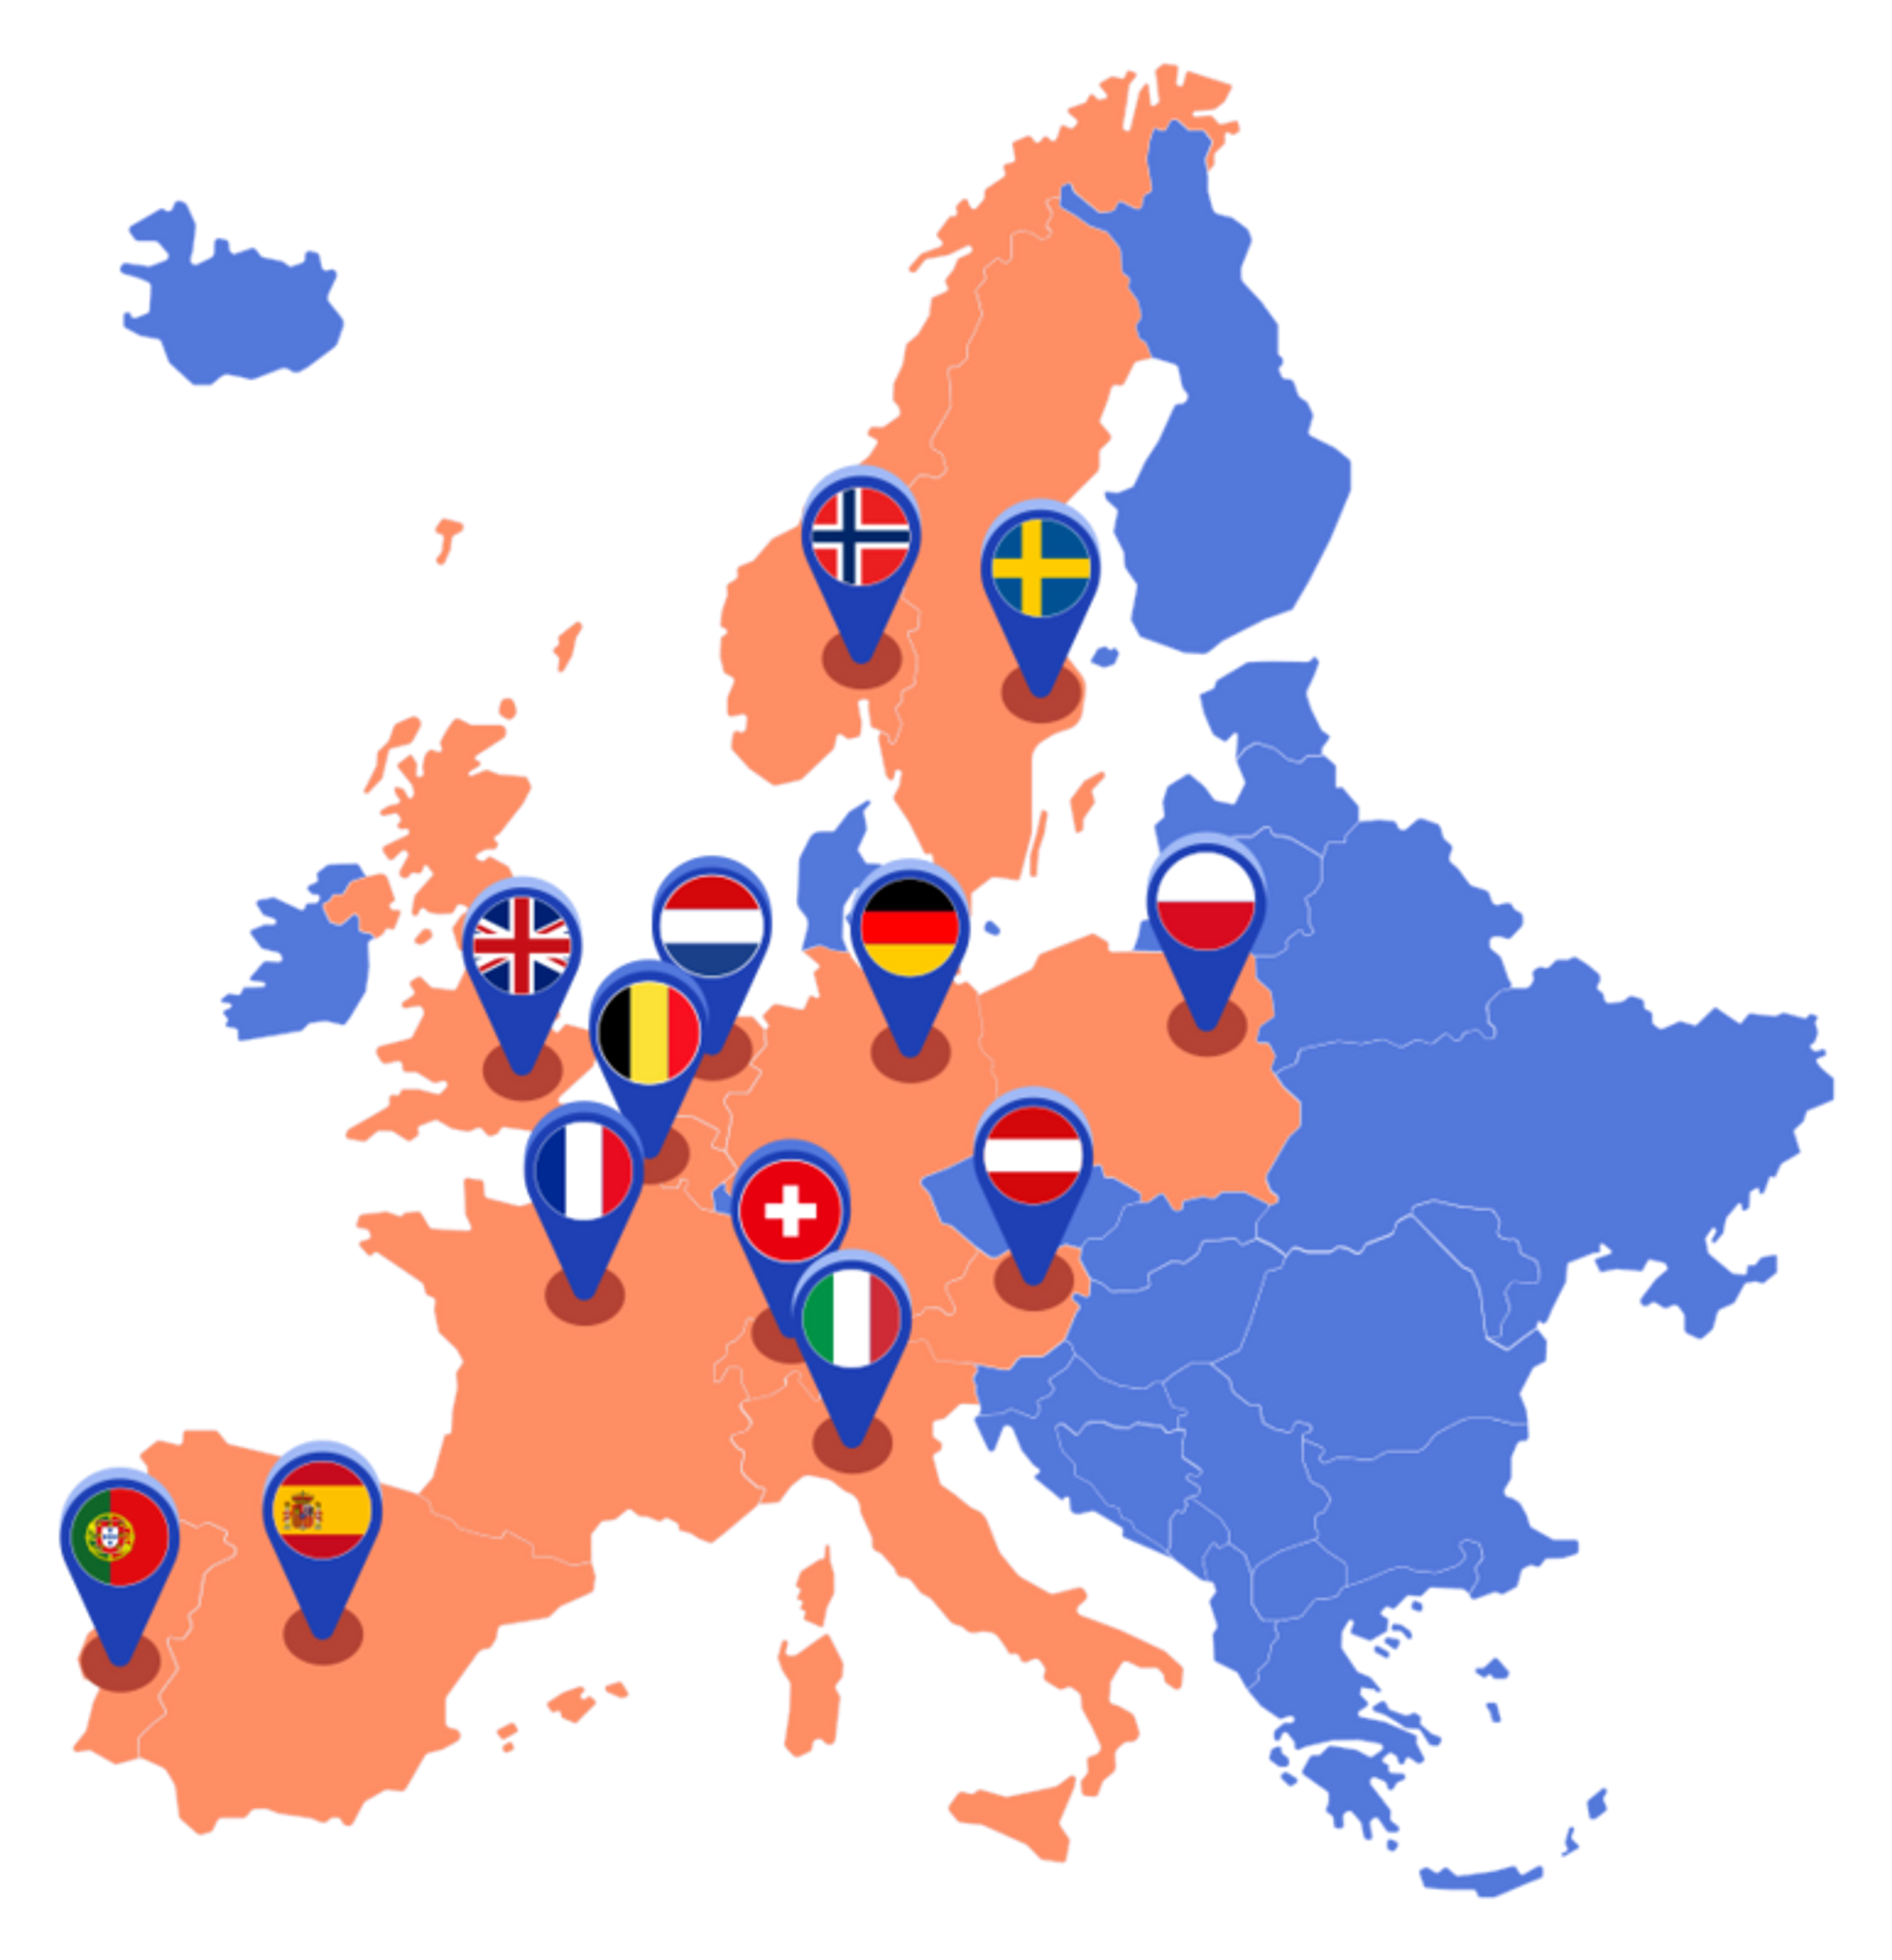 Otovo in Europe